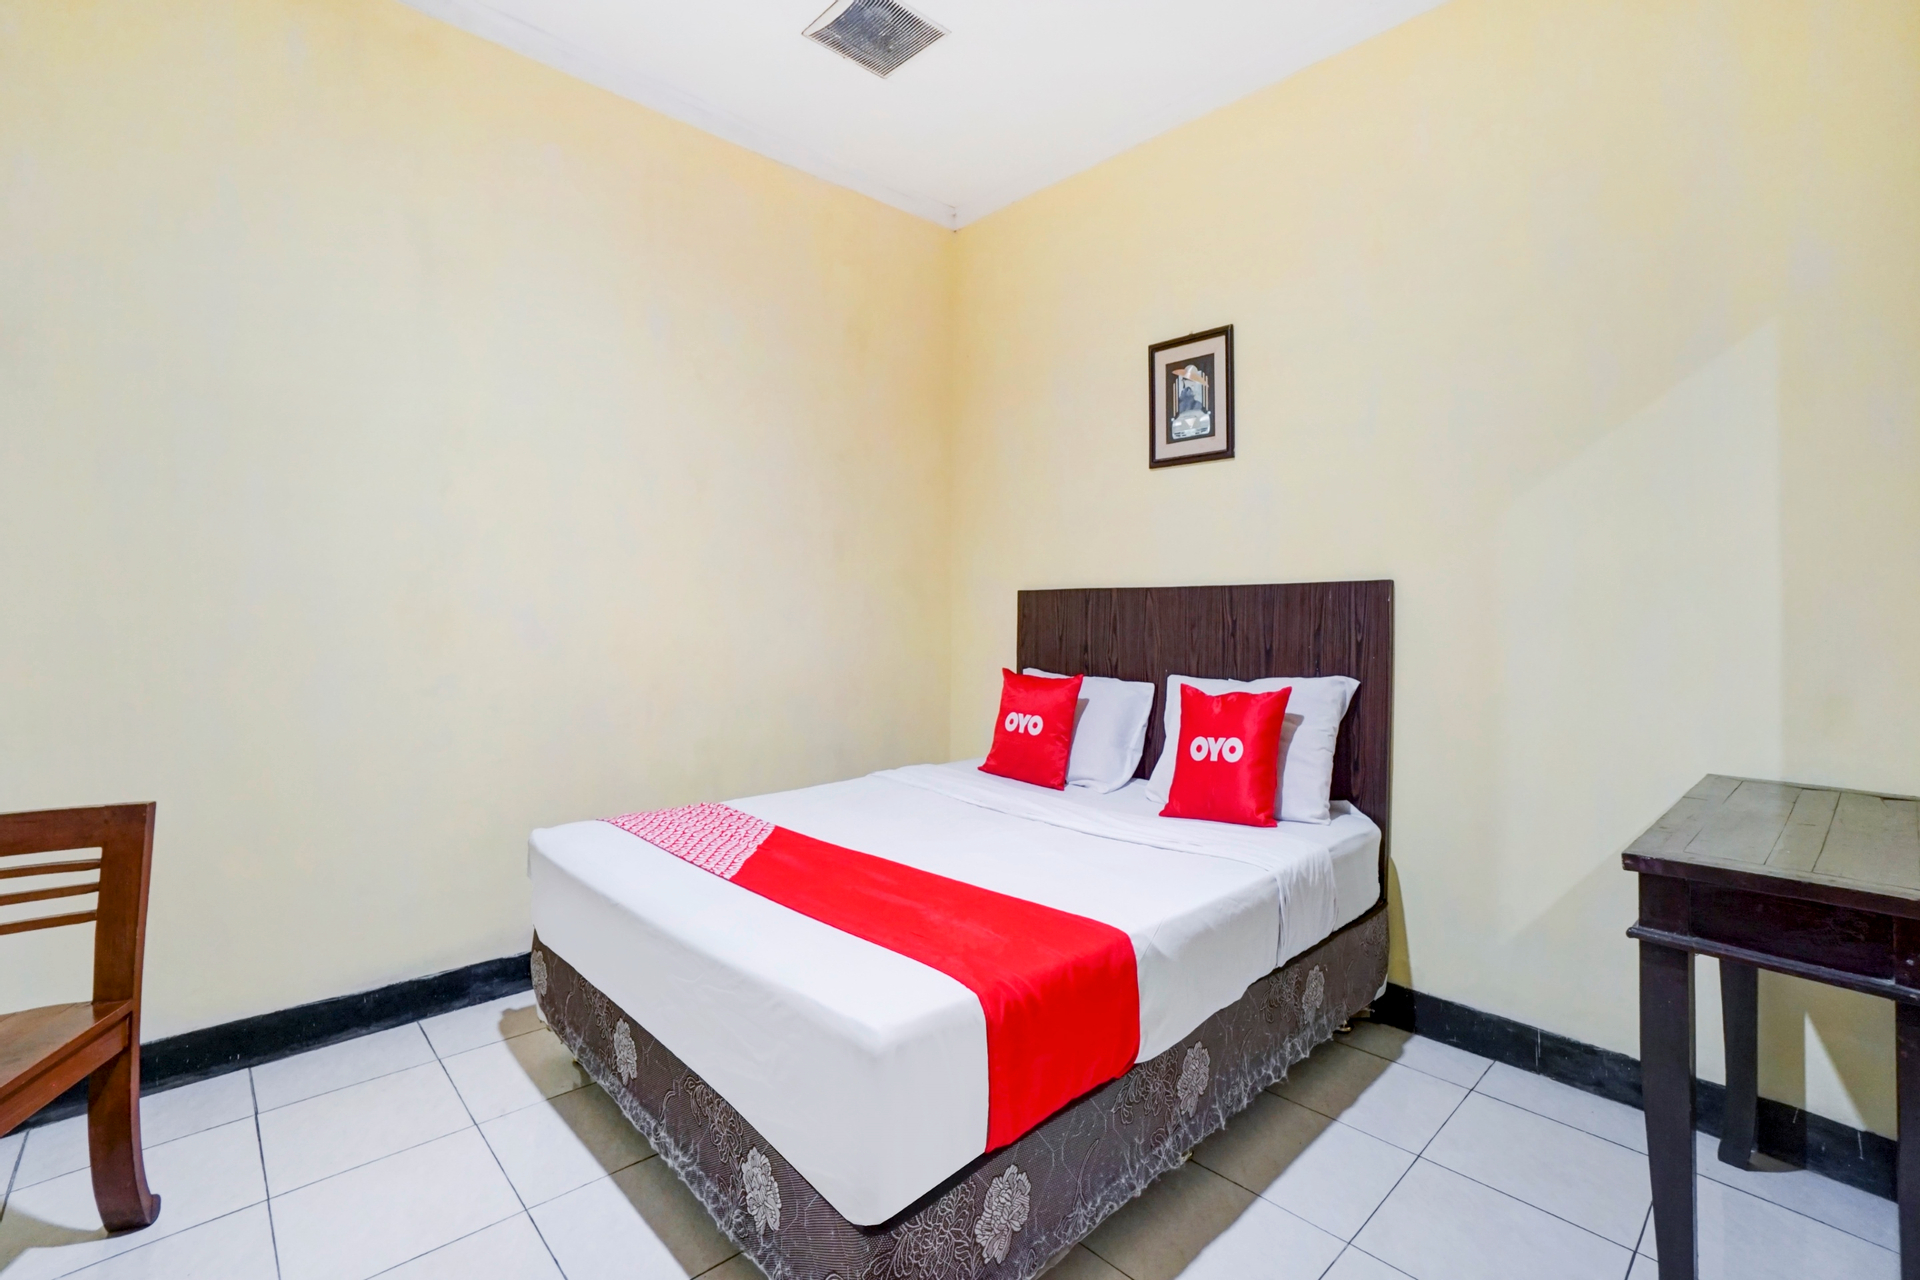 Bedroom 3, OYO 3956 Hotel Palem 2, Malang